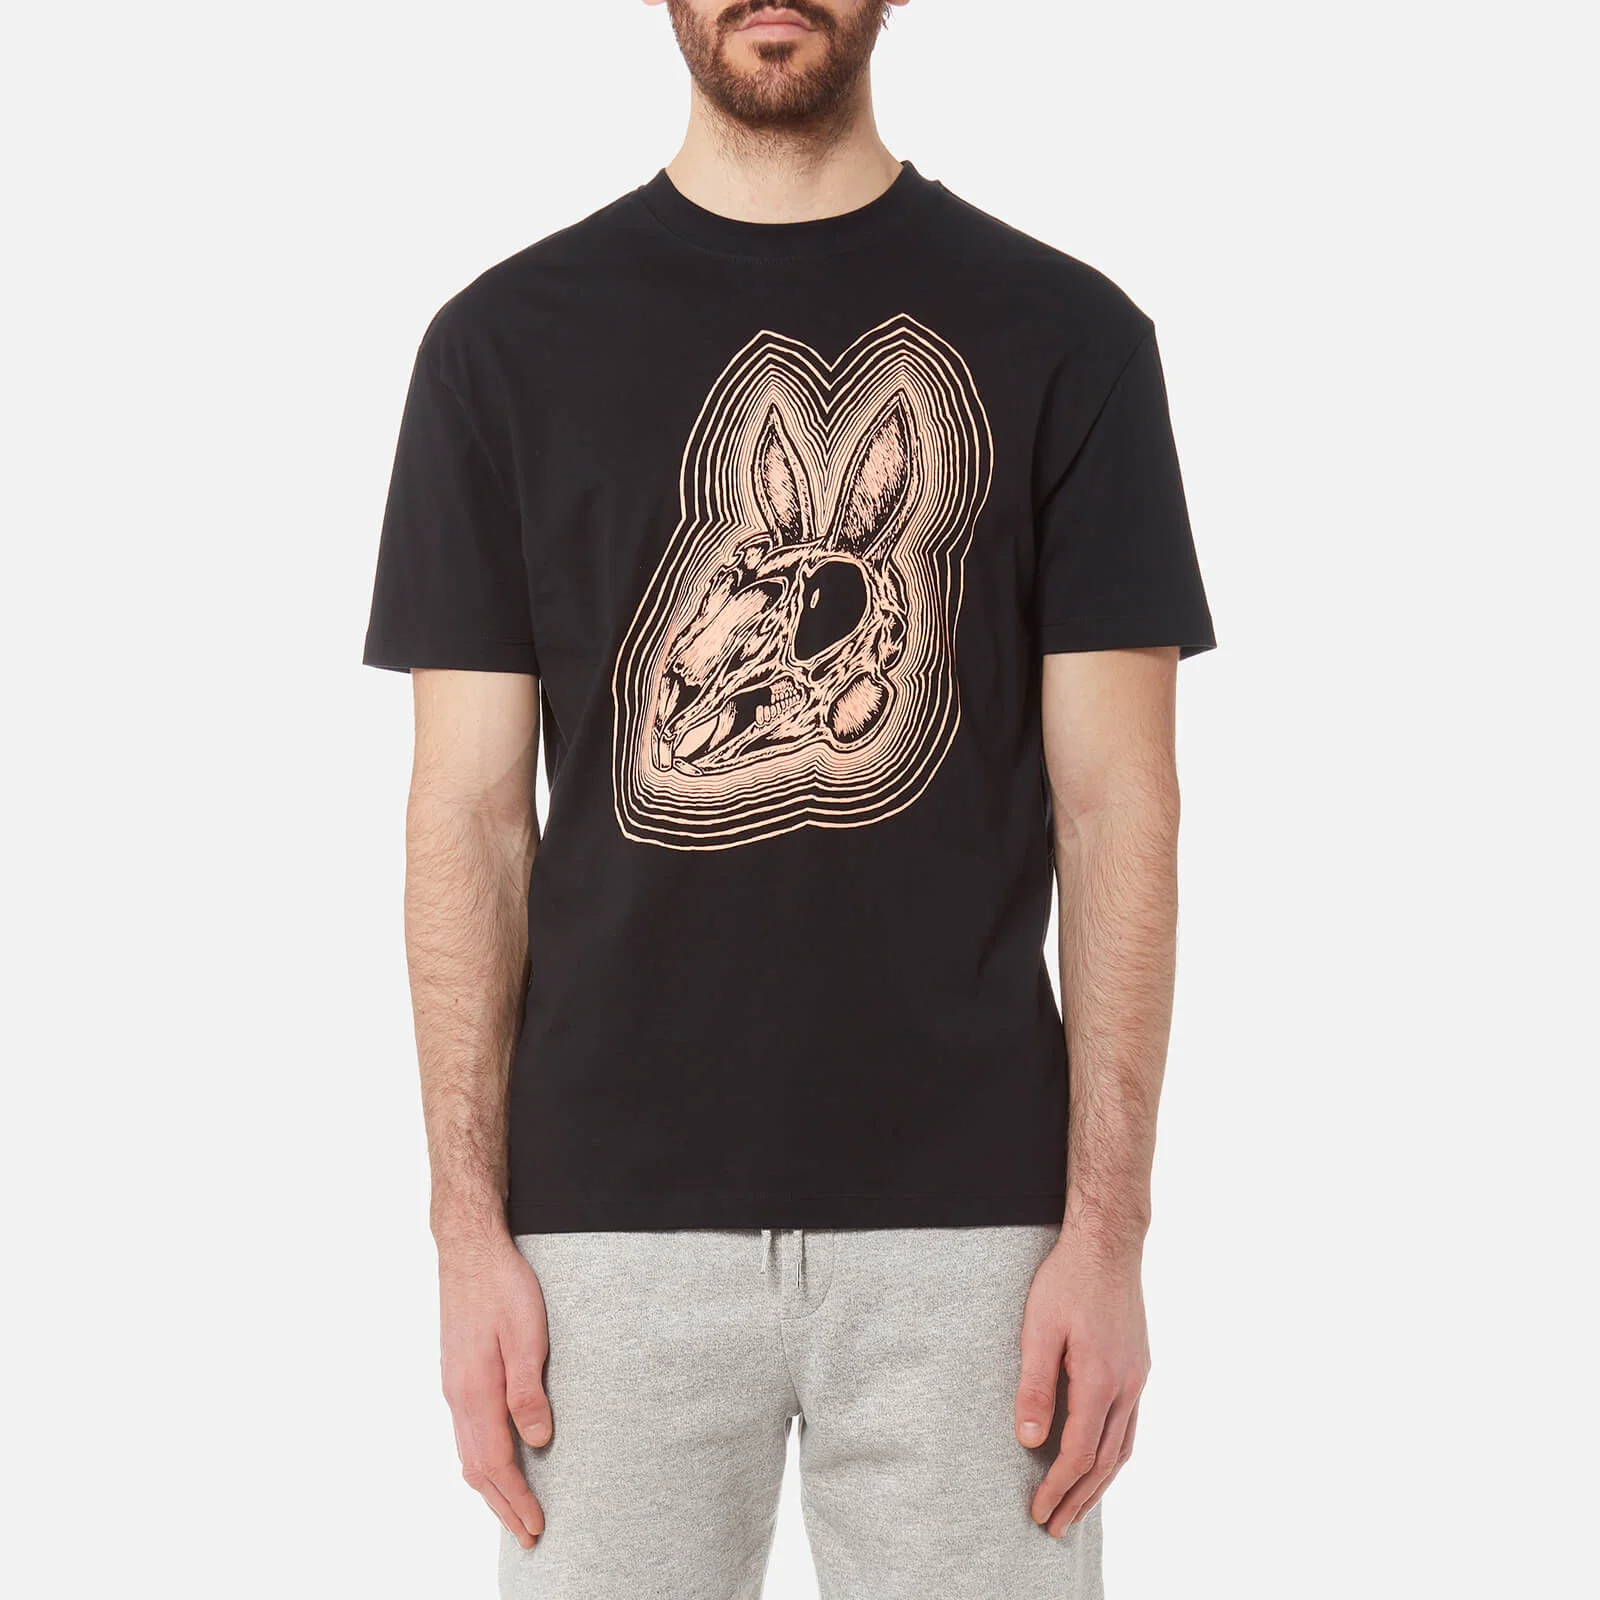 McQ Alexander McQueen Men's Bunny Print Dropped Shoulder T-Shirt - Darkest Black Image 1